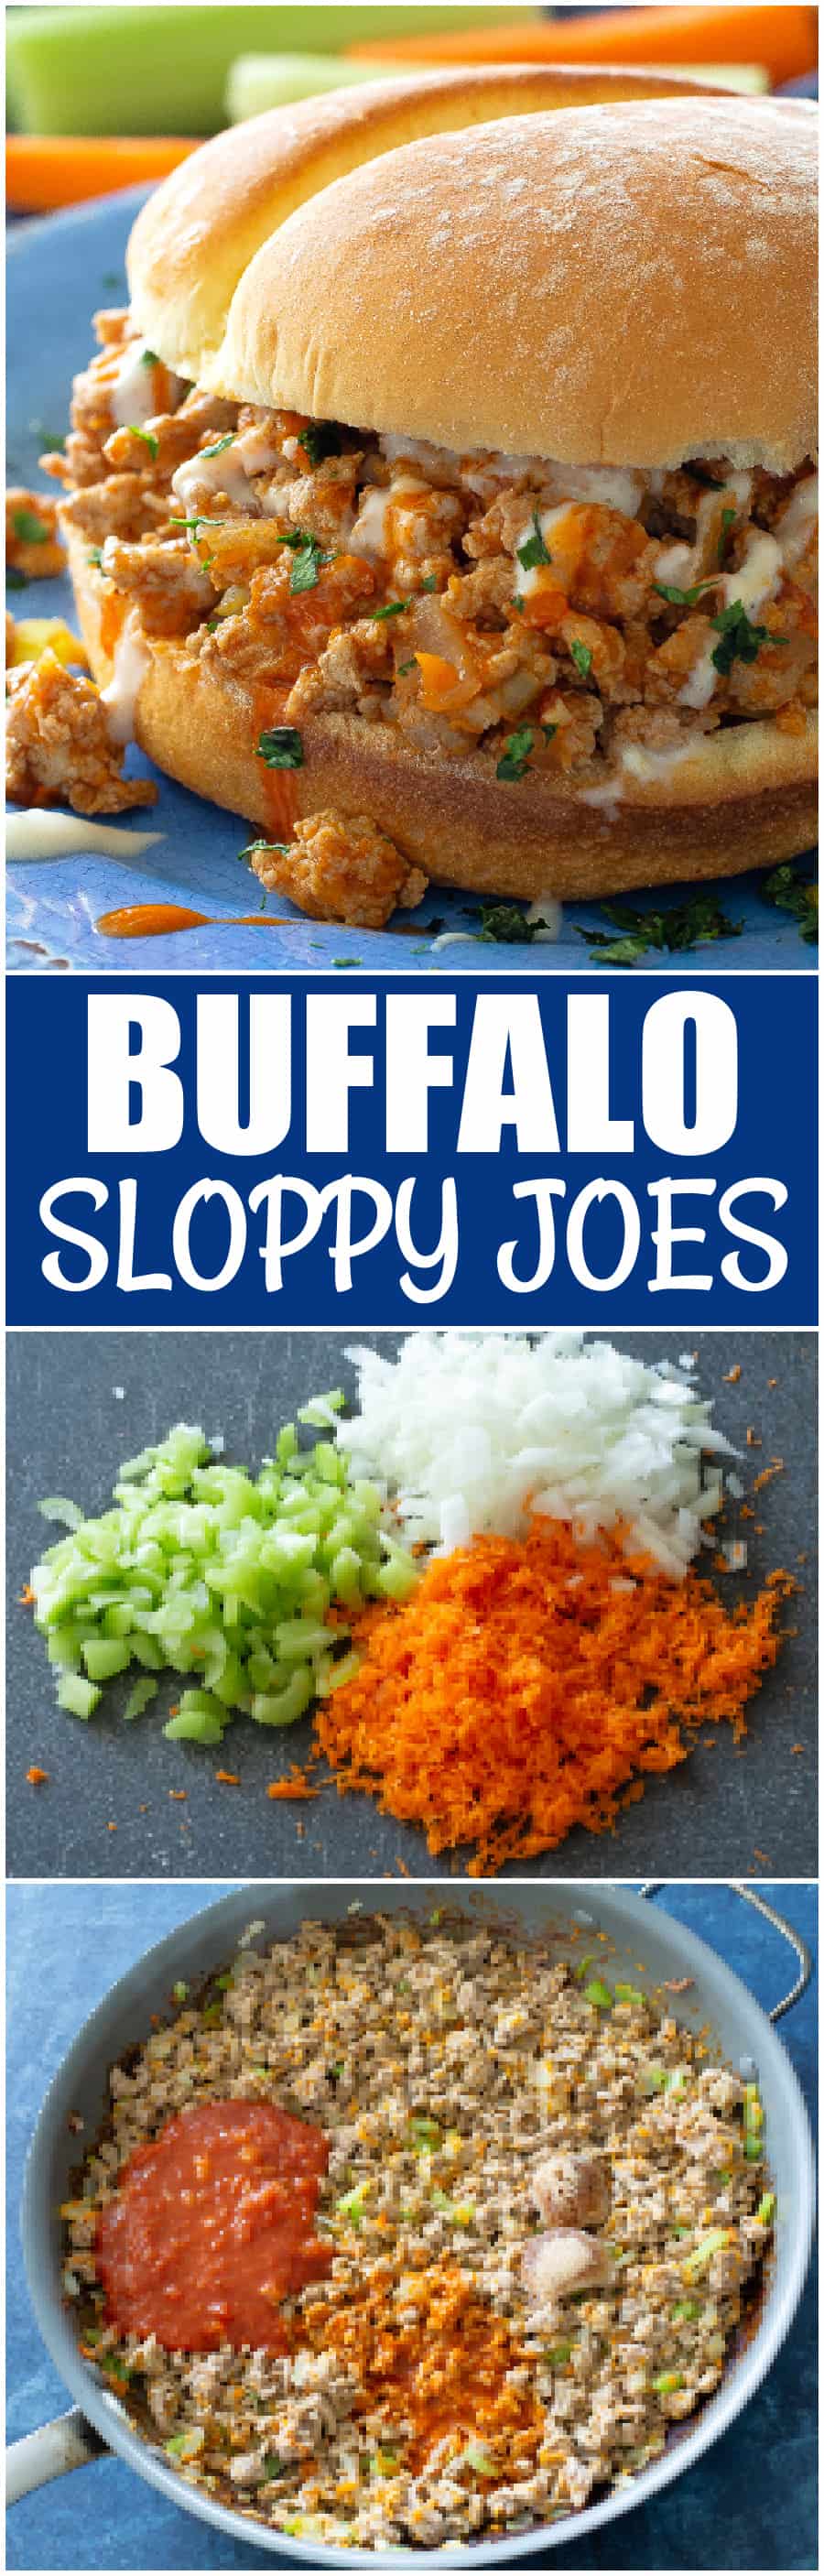 buffalo sloppy joes